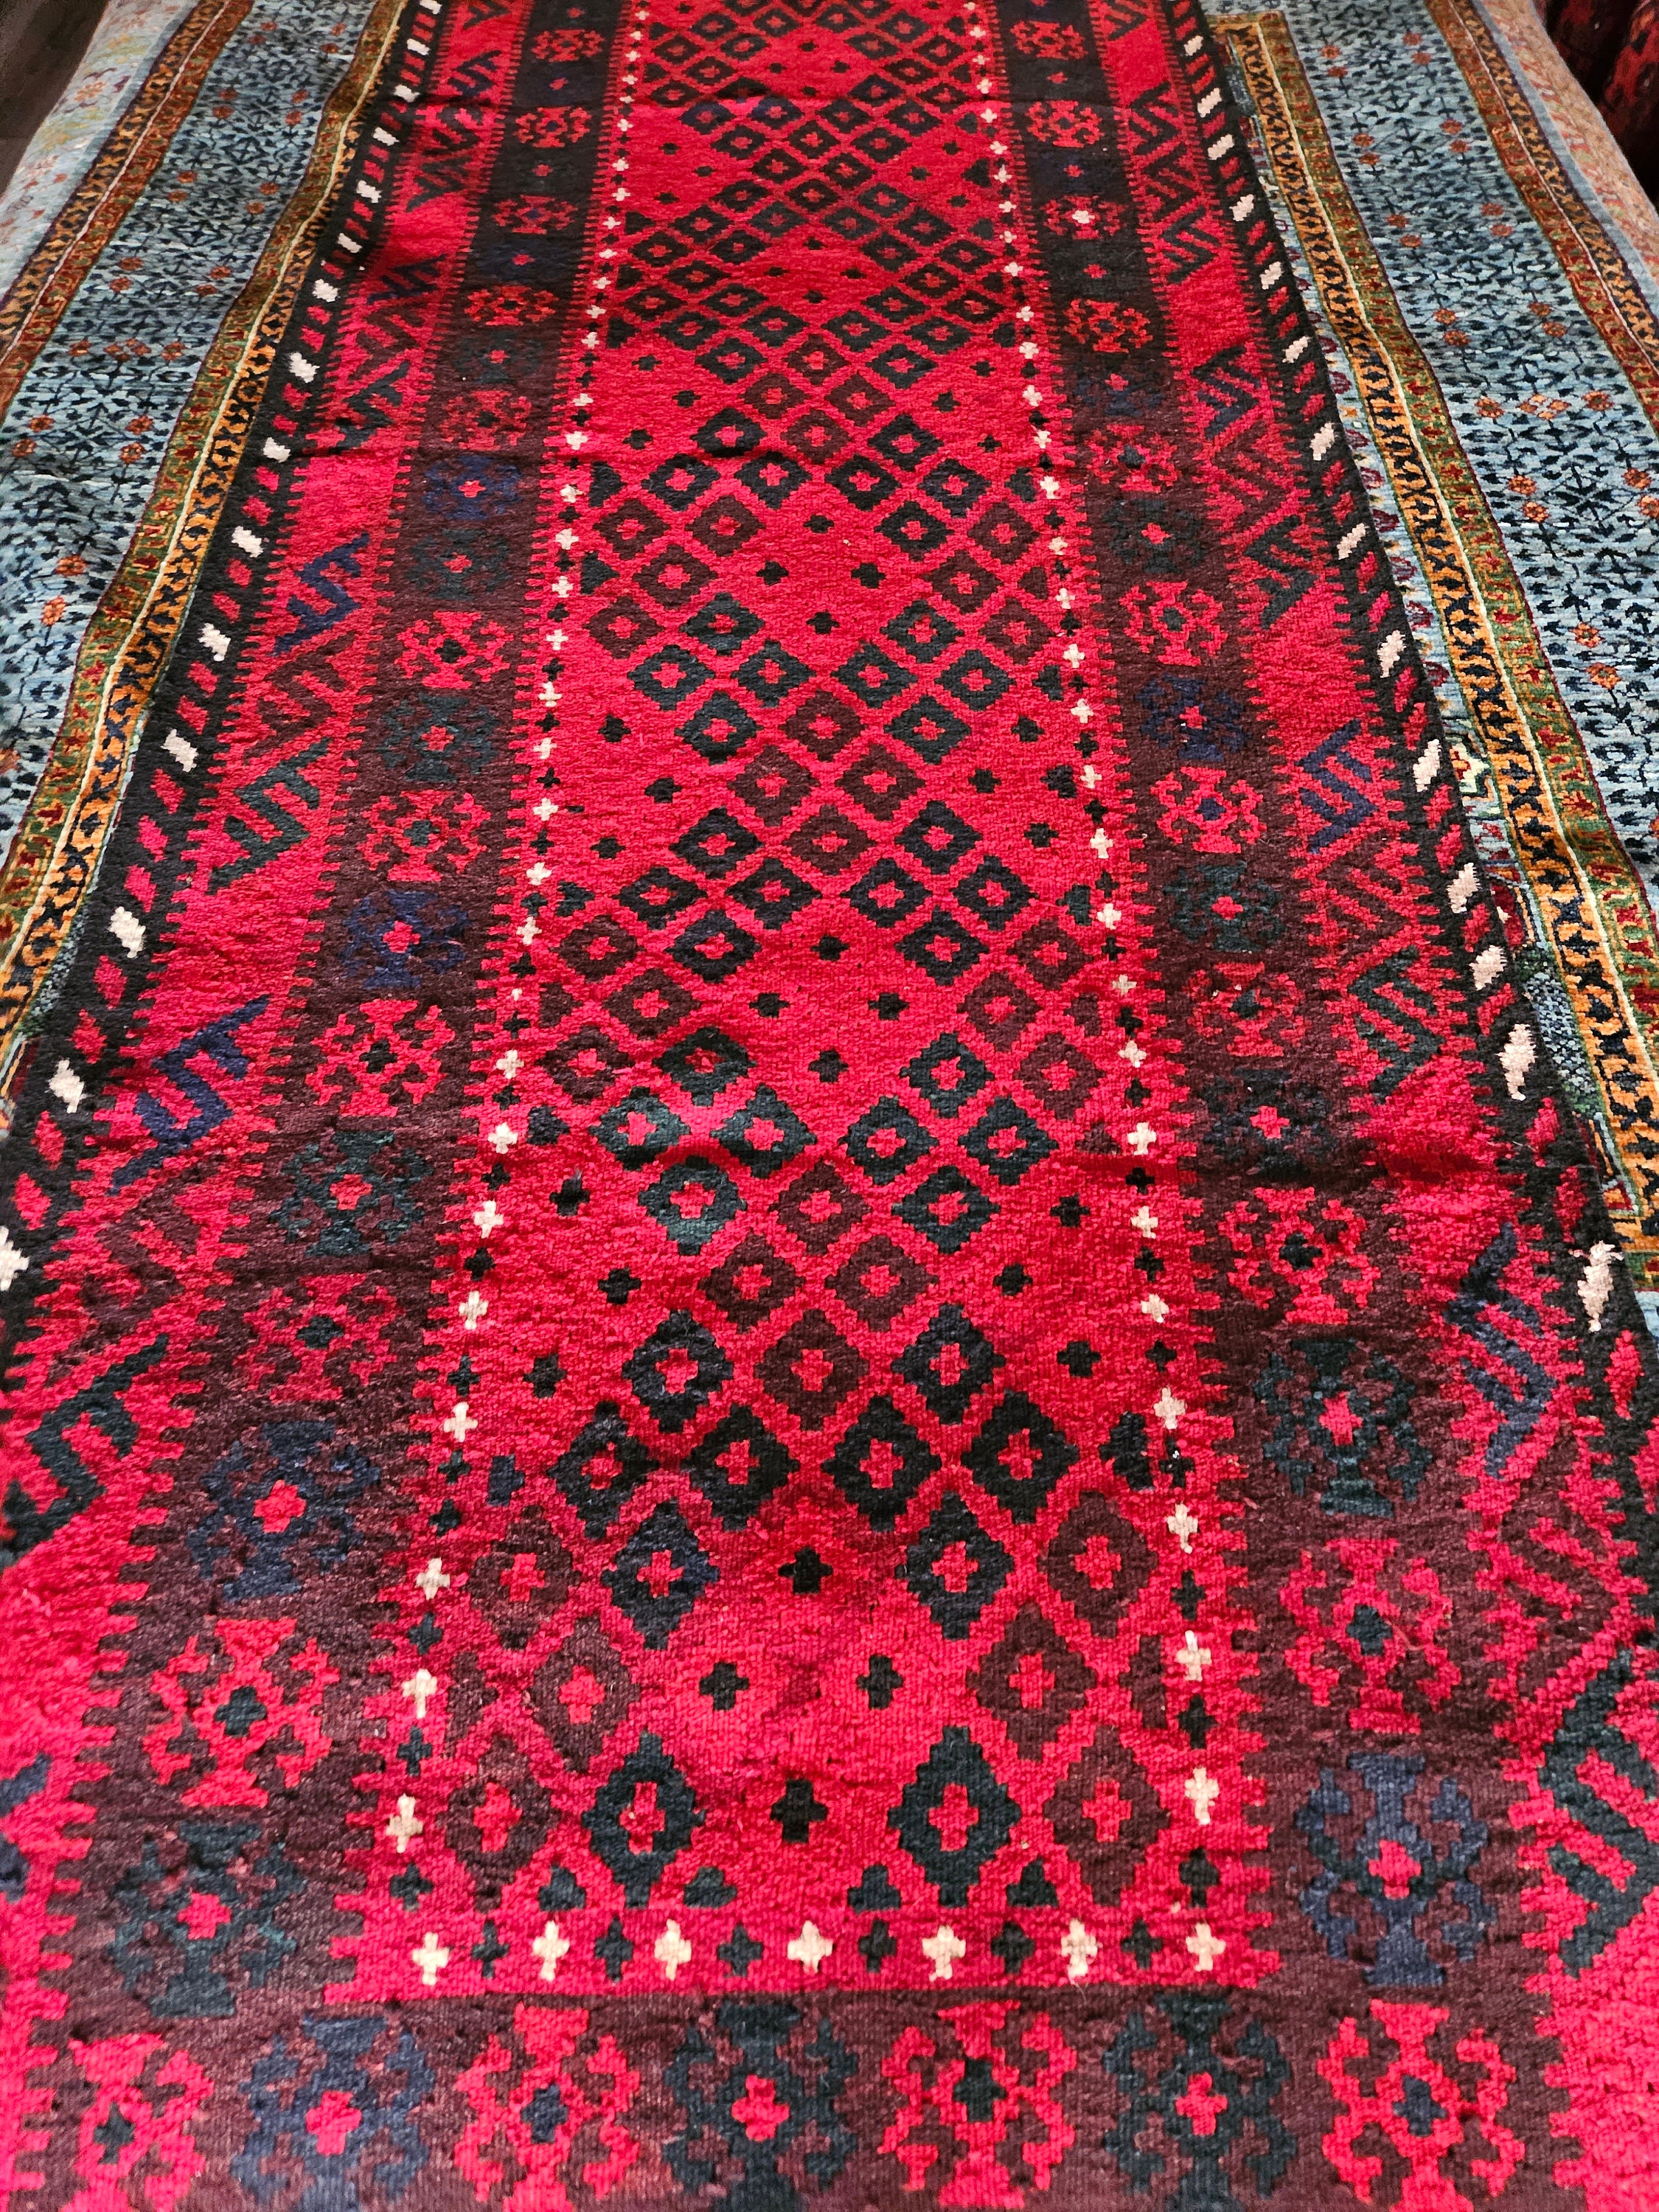 Red Persian Design Bath Rugs Absorbent Non Slip Door Mats Soft Ca